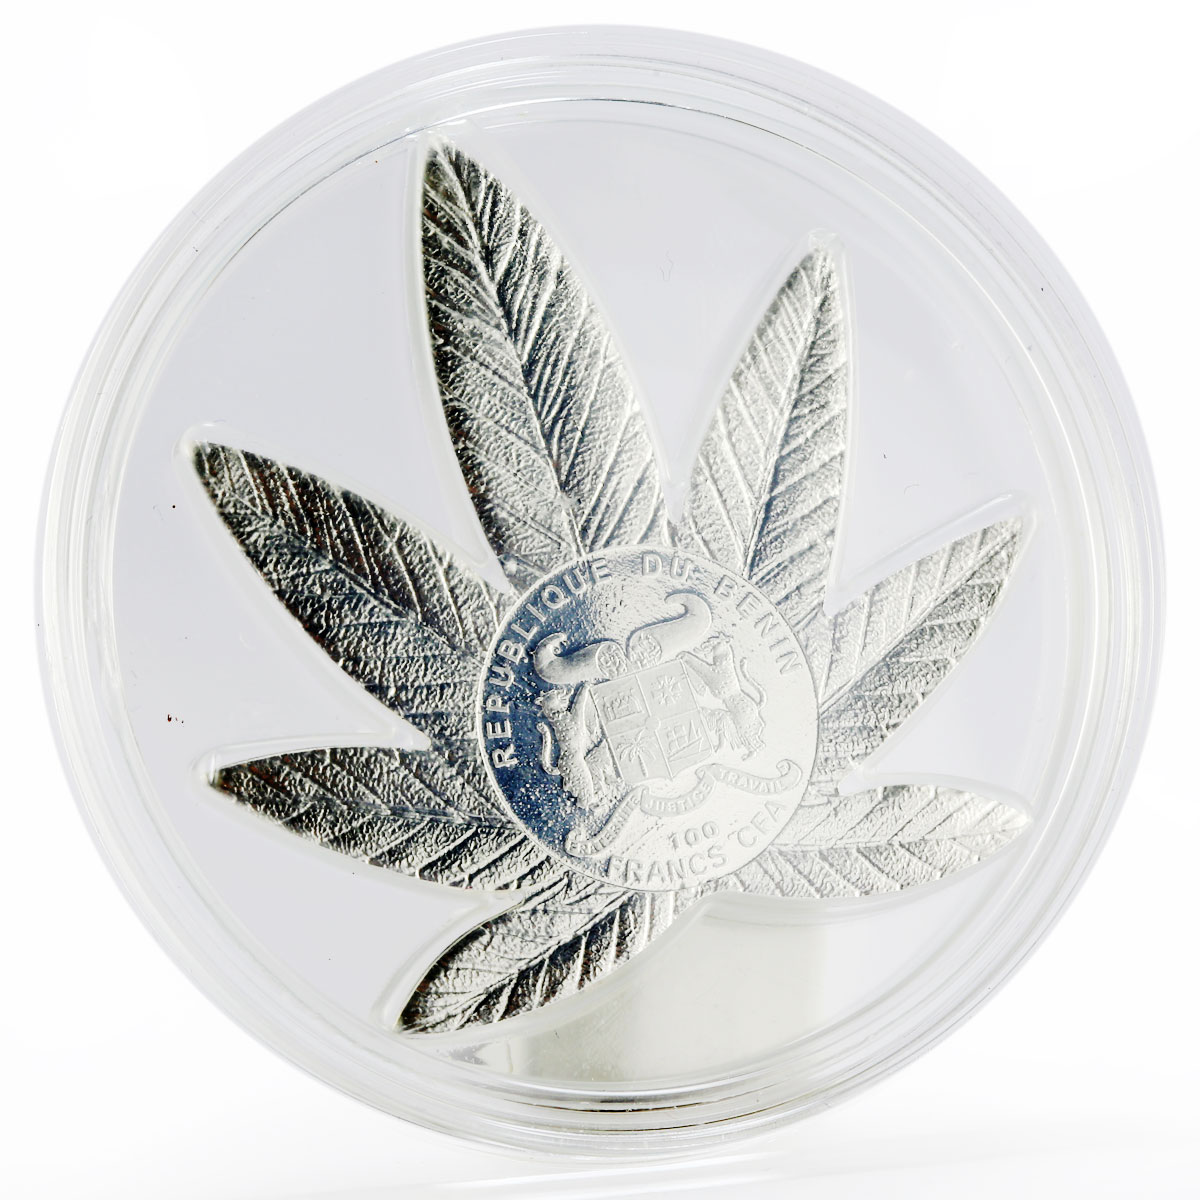 Benin 100 francs Cannabis Sativa colored silver coin 2011